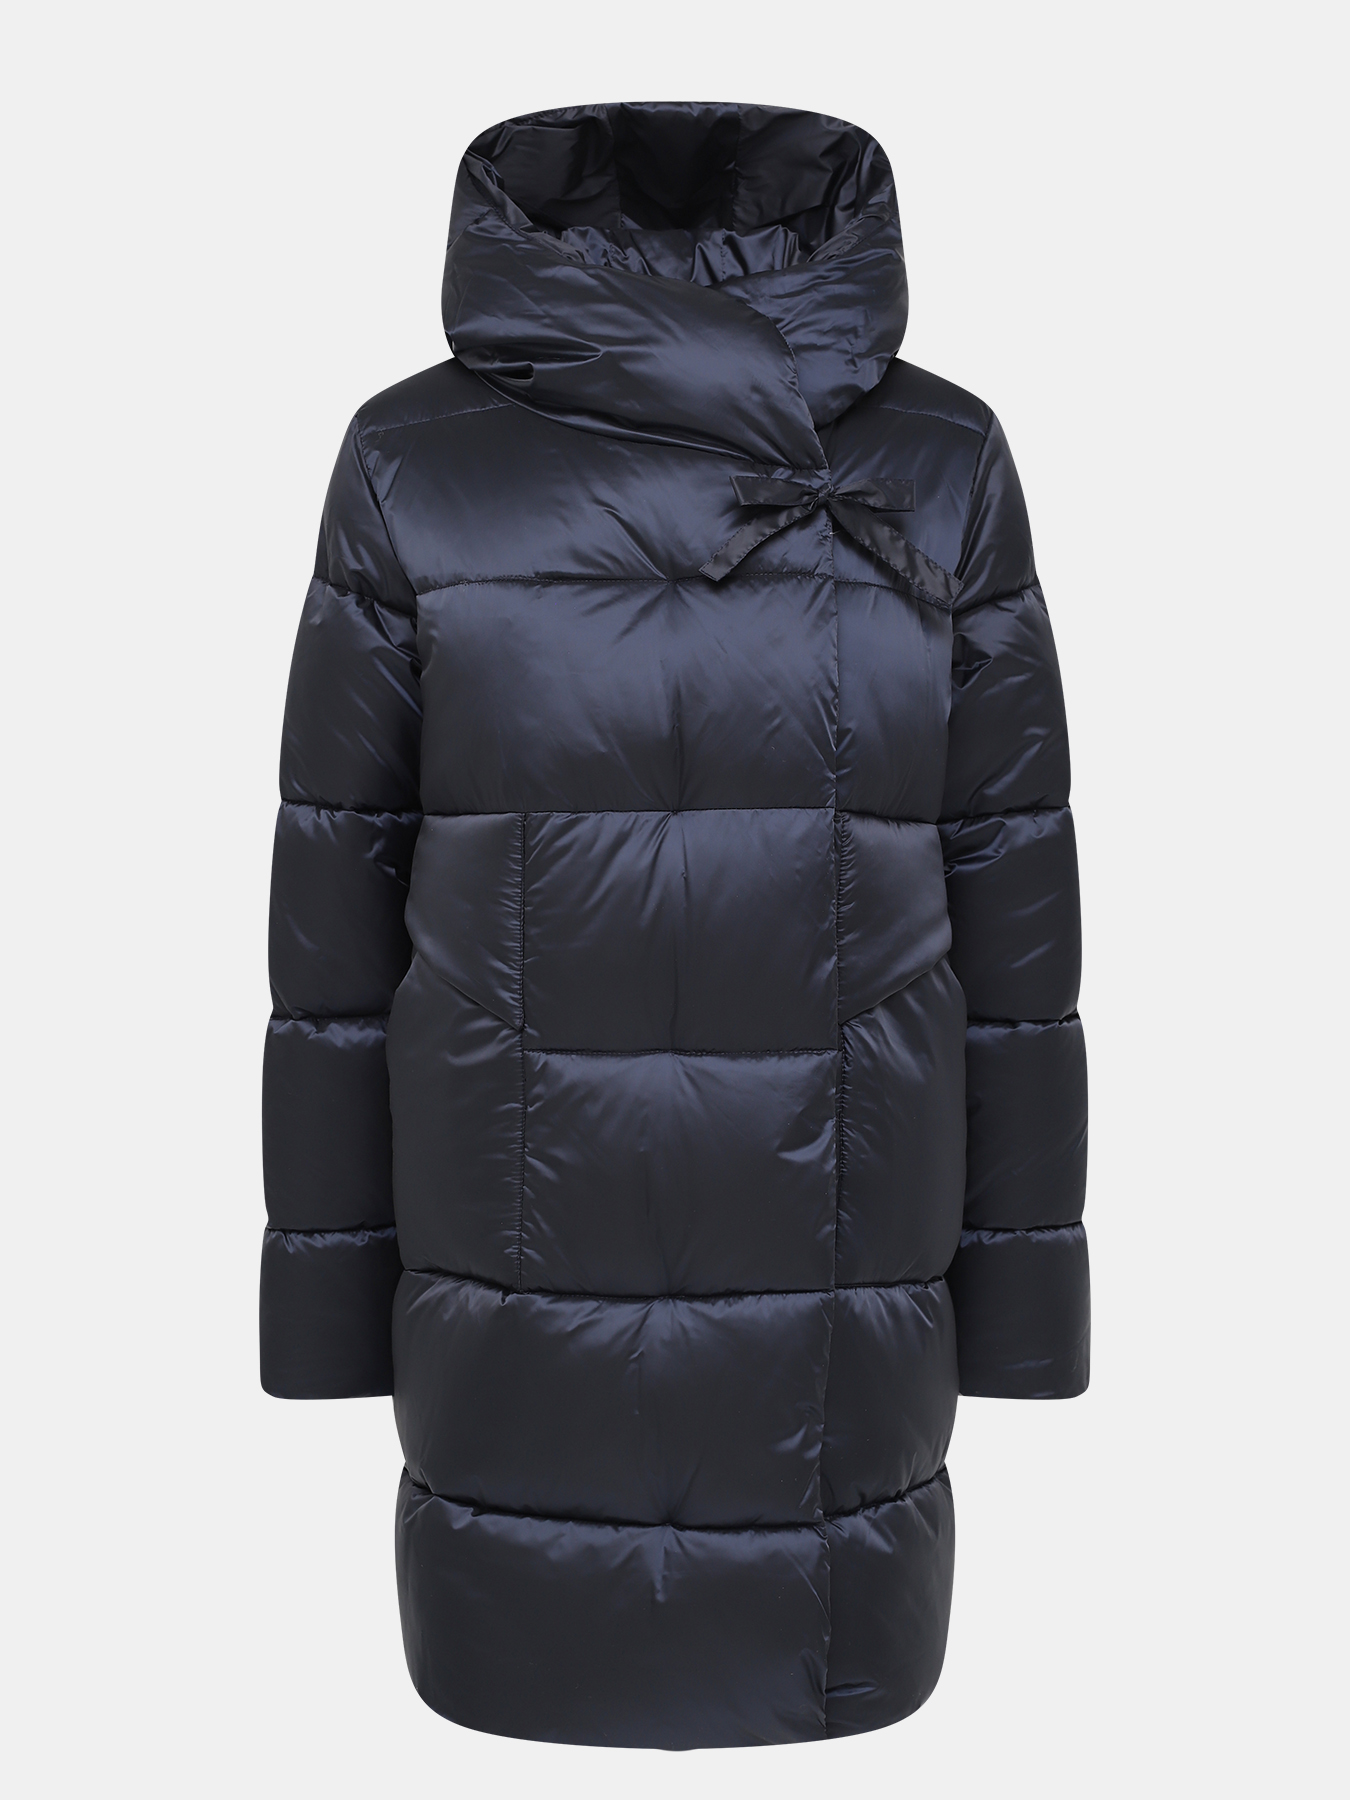 Пальто зимнее Maritta 433530-021, цвет темно-синий, размер 46